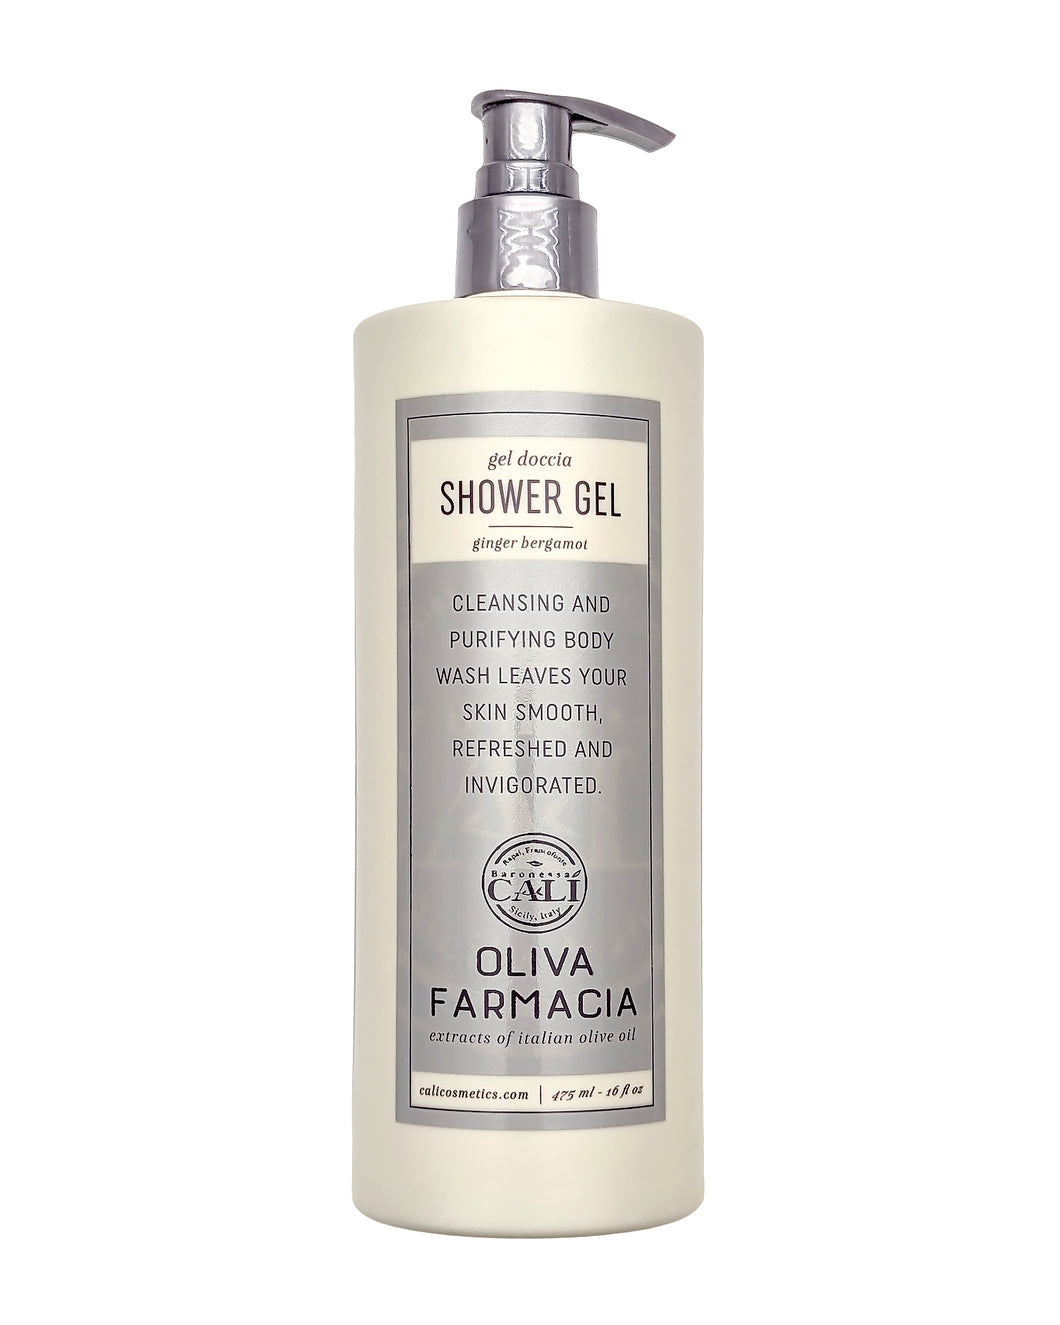 Oliva Farmacia GEL DOCCIA Shower Gel 475ml/16 fl oz